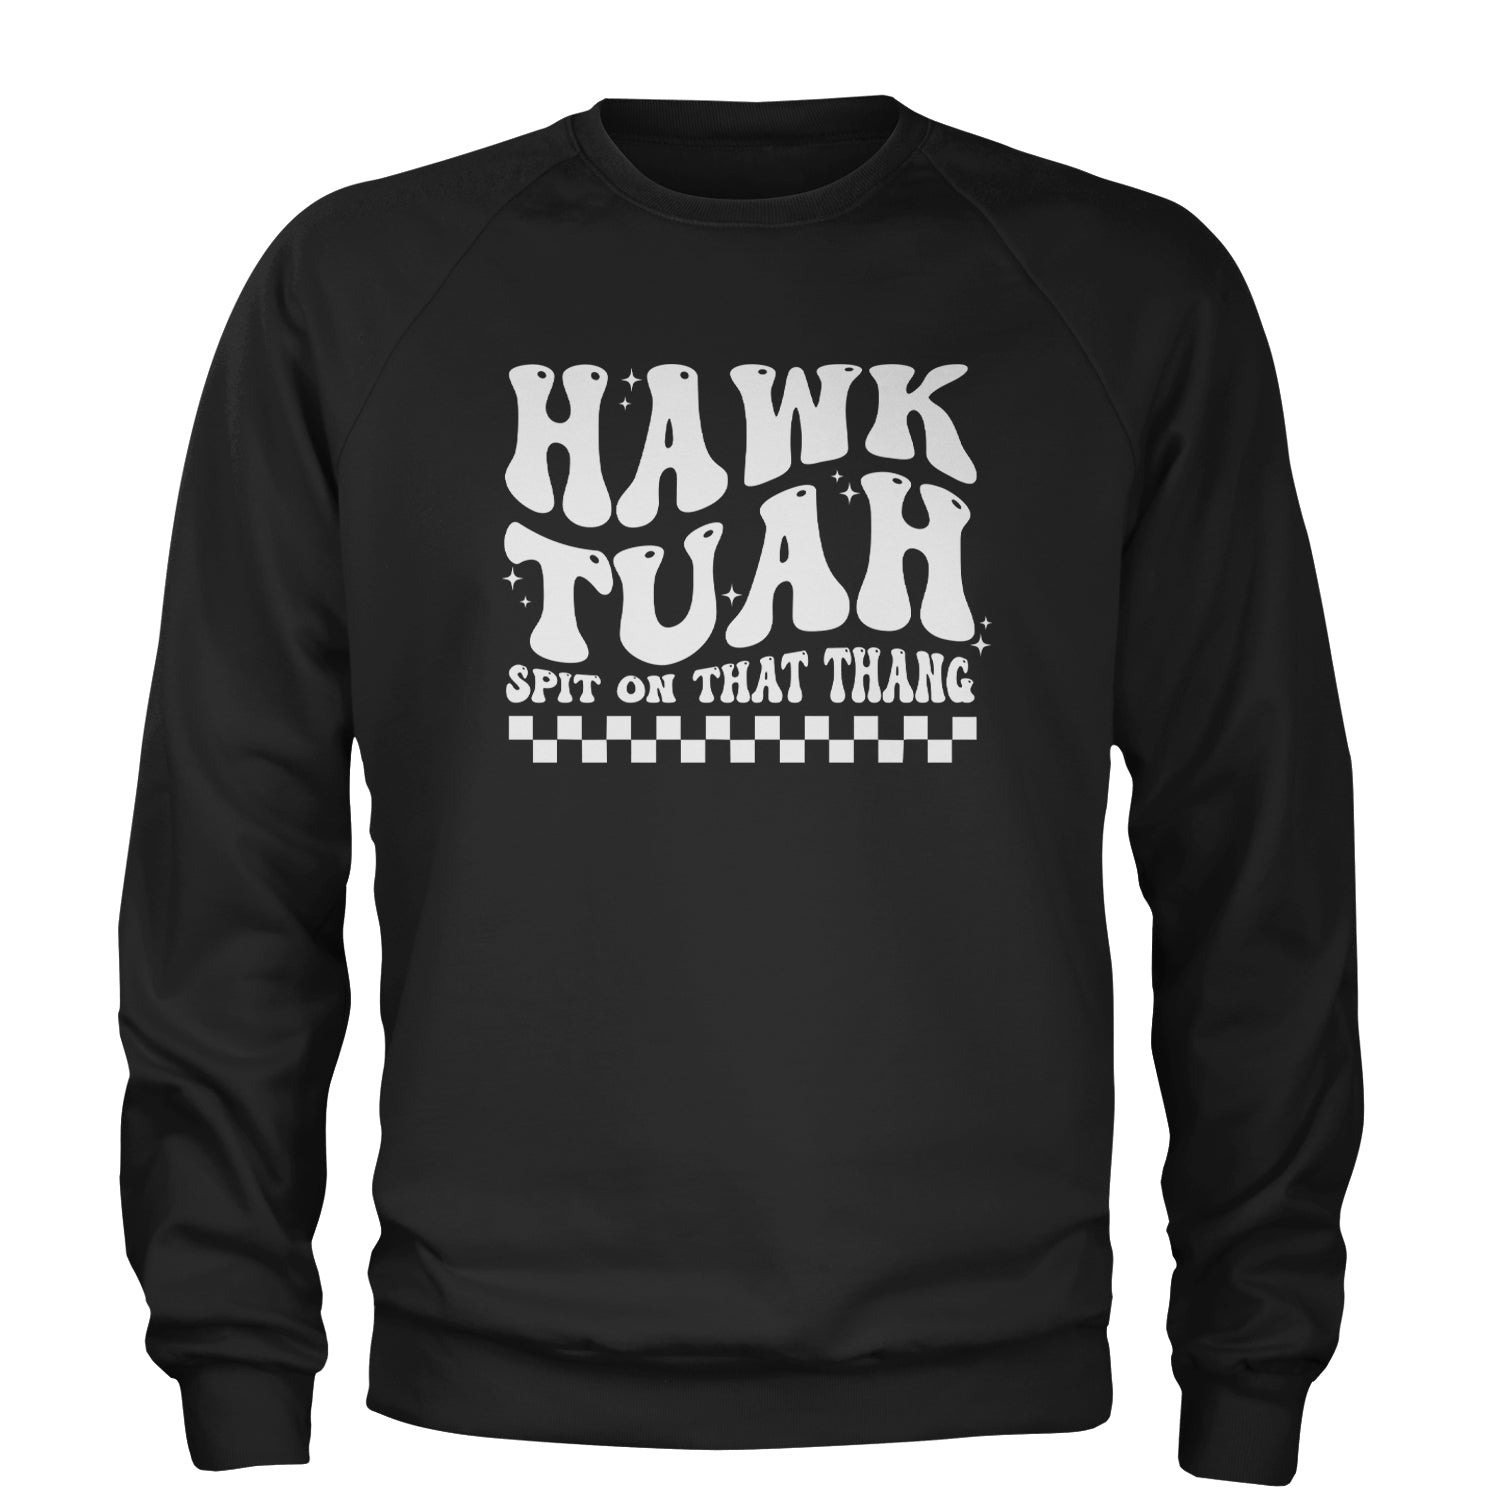 Hawk Tuah Spit On That Thang Adult Crewneck Sweatshirt Black